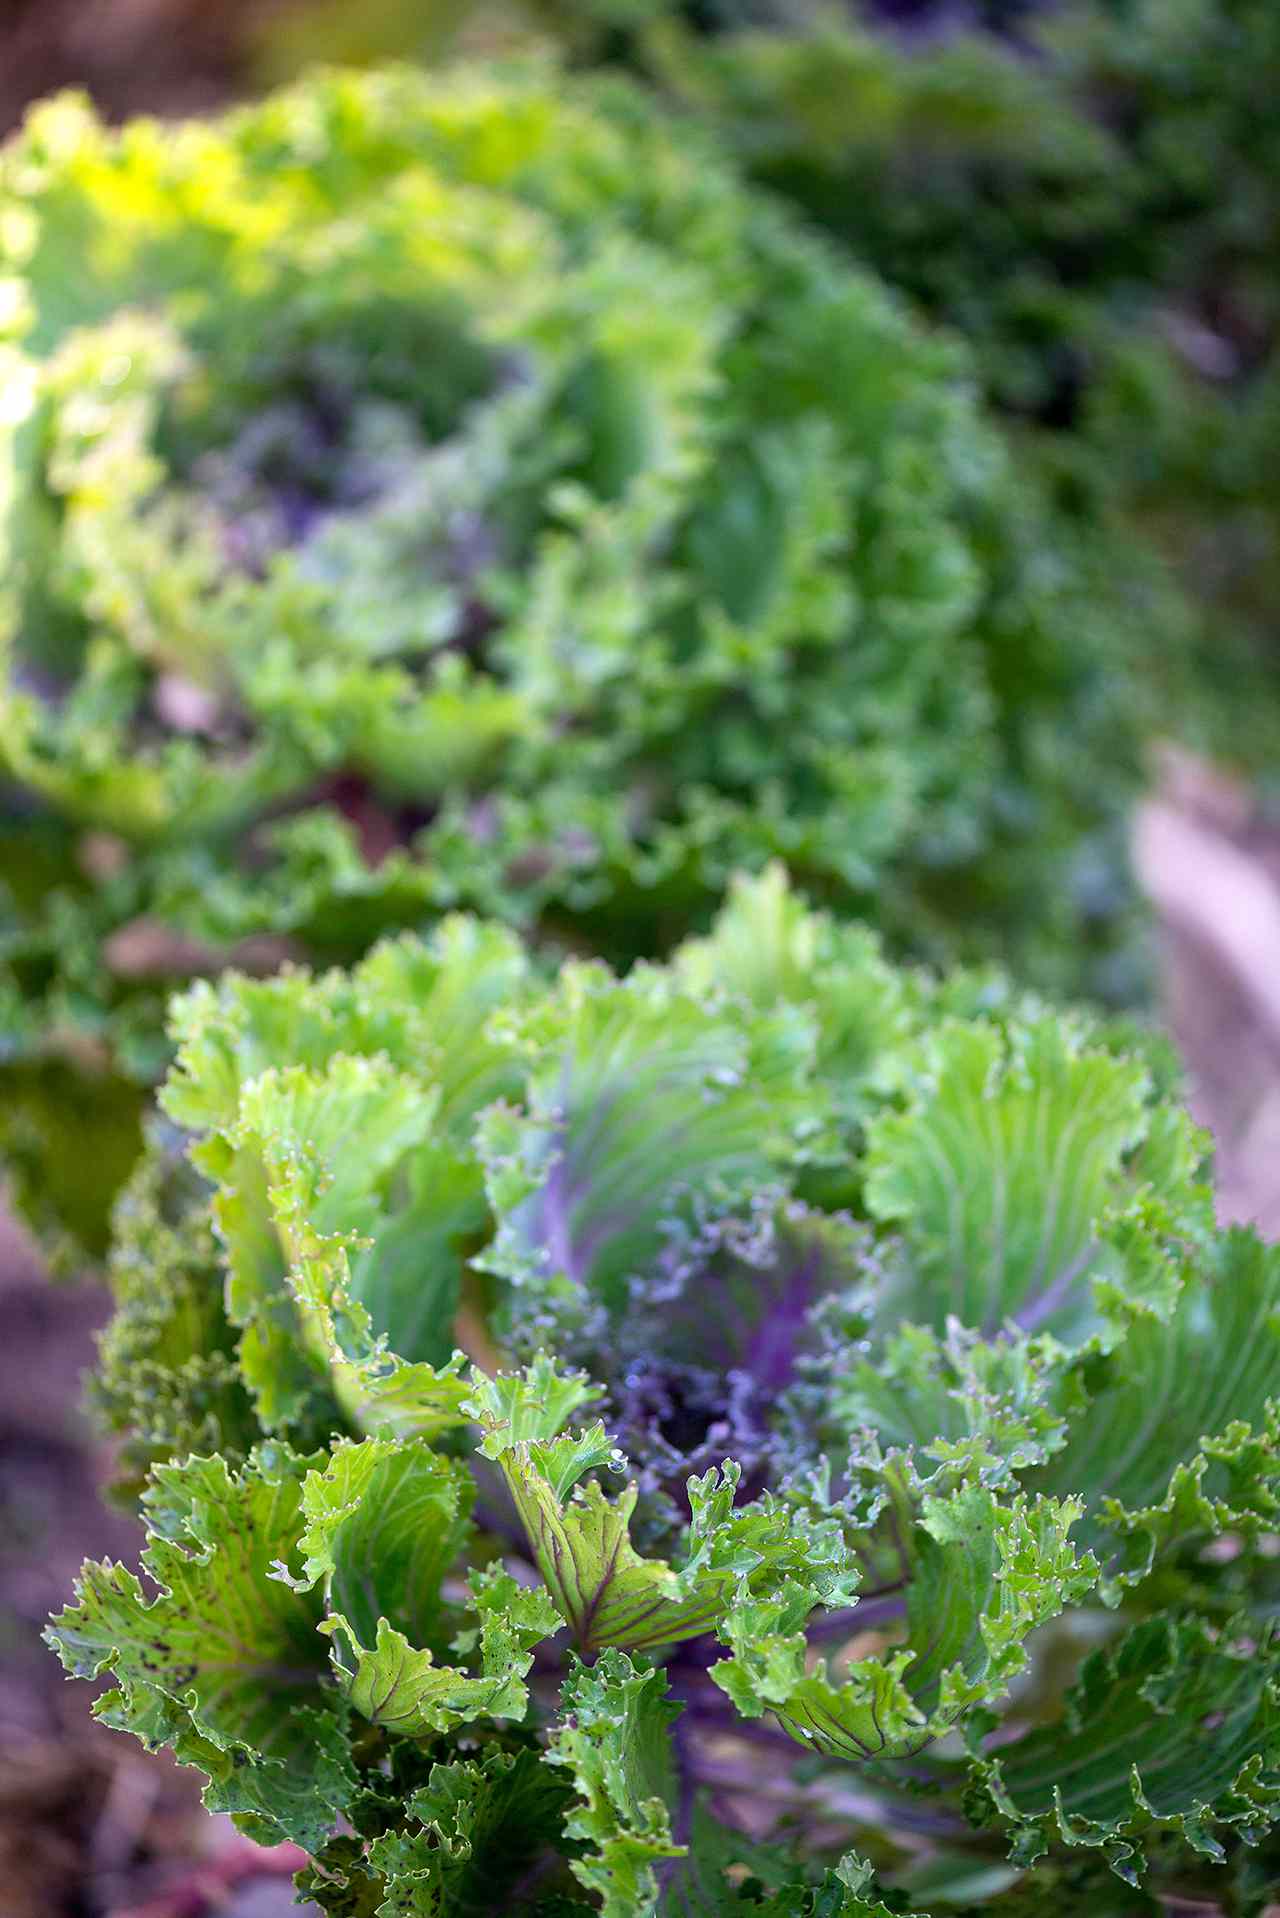 kale detail in garden